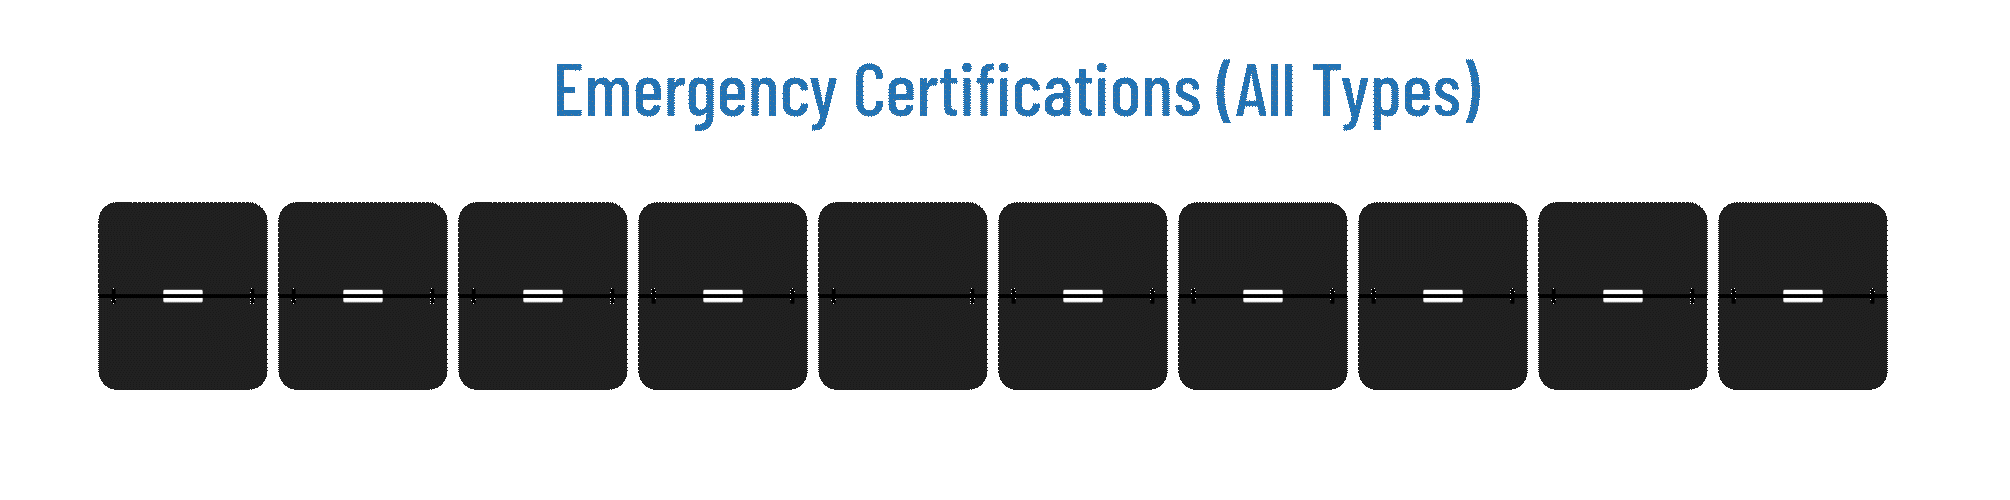 Emergency Certifications (All Types): 1-2 Weeks